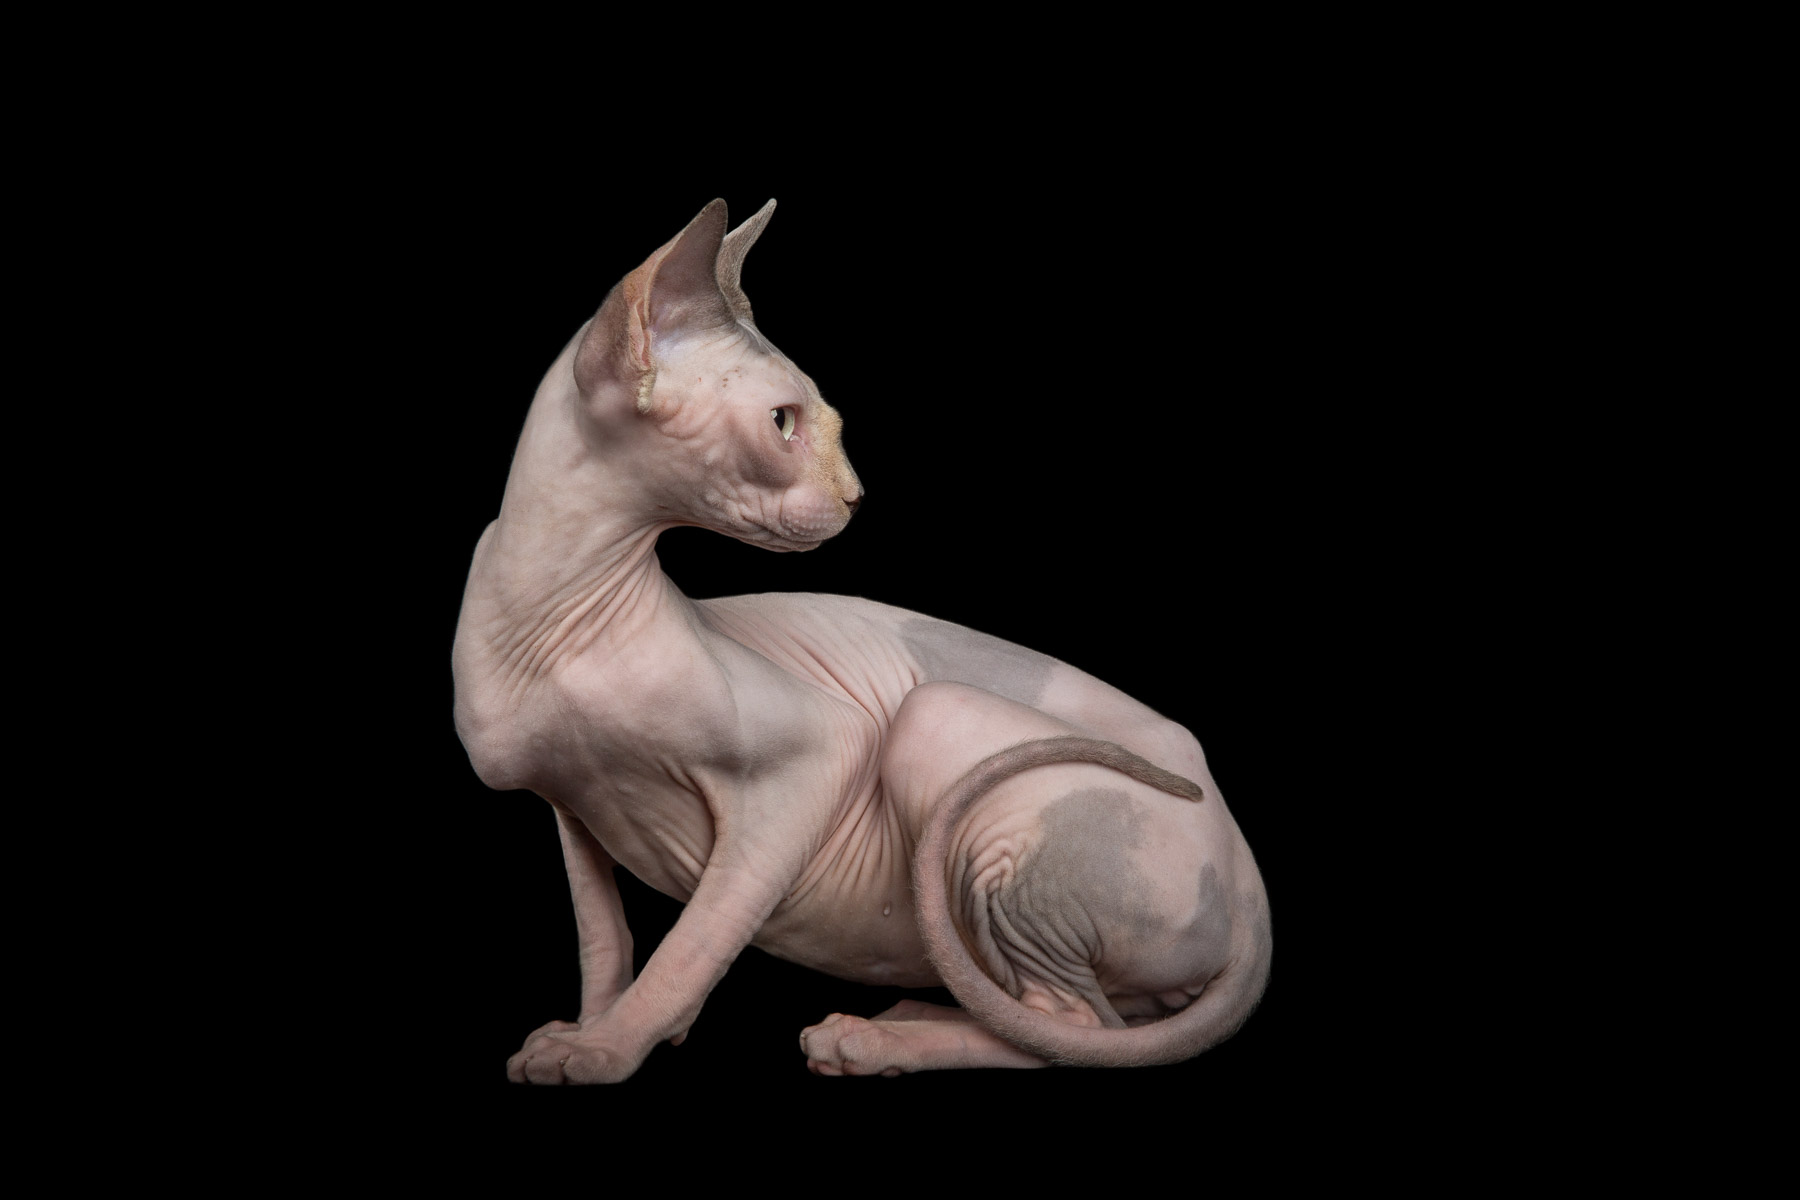 4Sphynx-cat-hairless-cat-photographer-pets-alicia-rius.jpg.